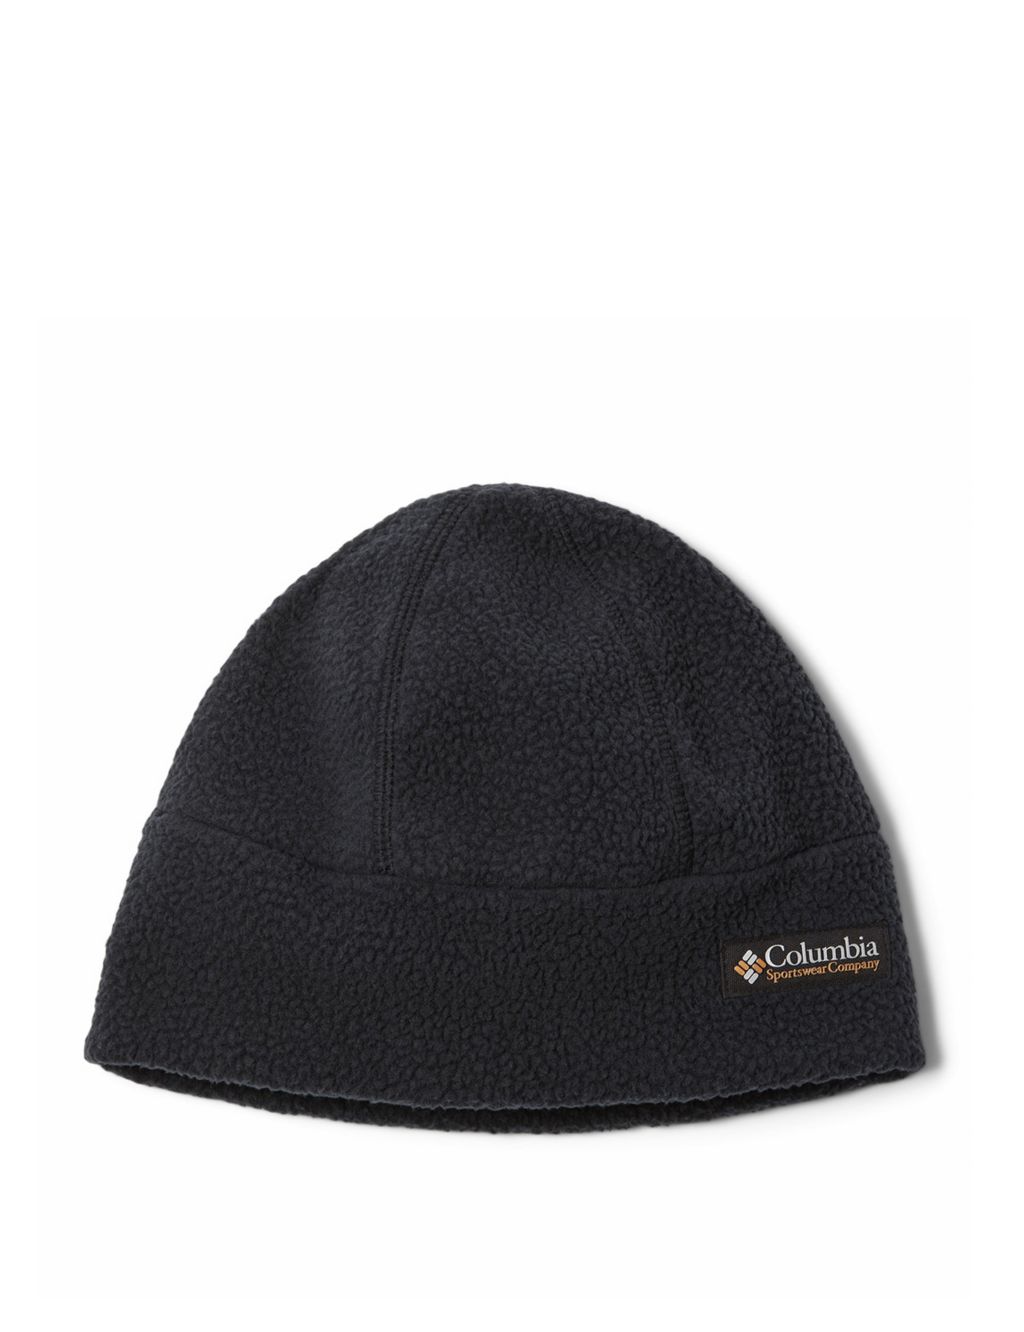 Helvetia™ Sherpa Beanie Hat image 1